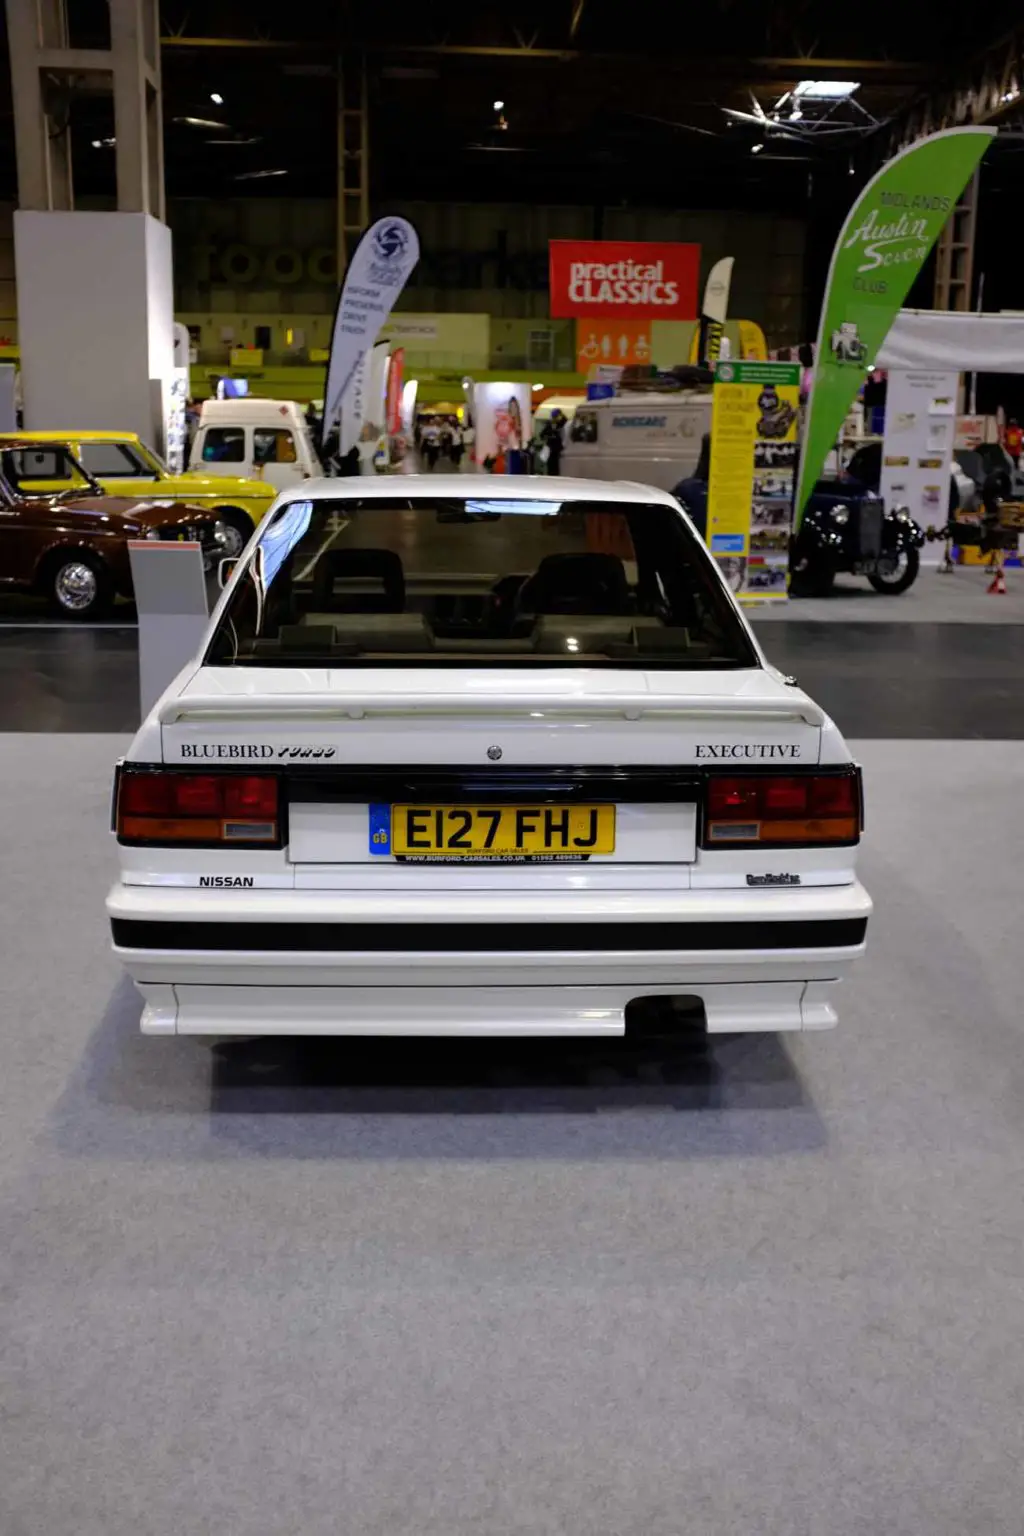 1988 Nissan Buebird Turbo ZX - Practical Classics Restoration Show 2022